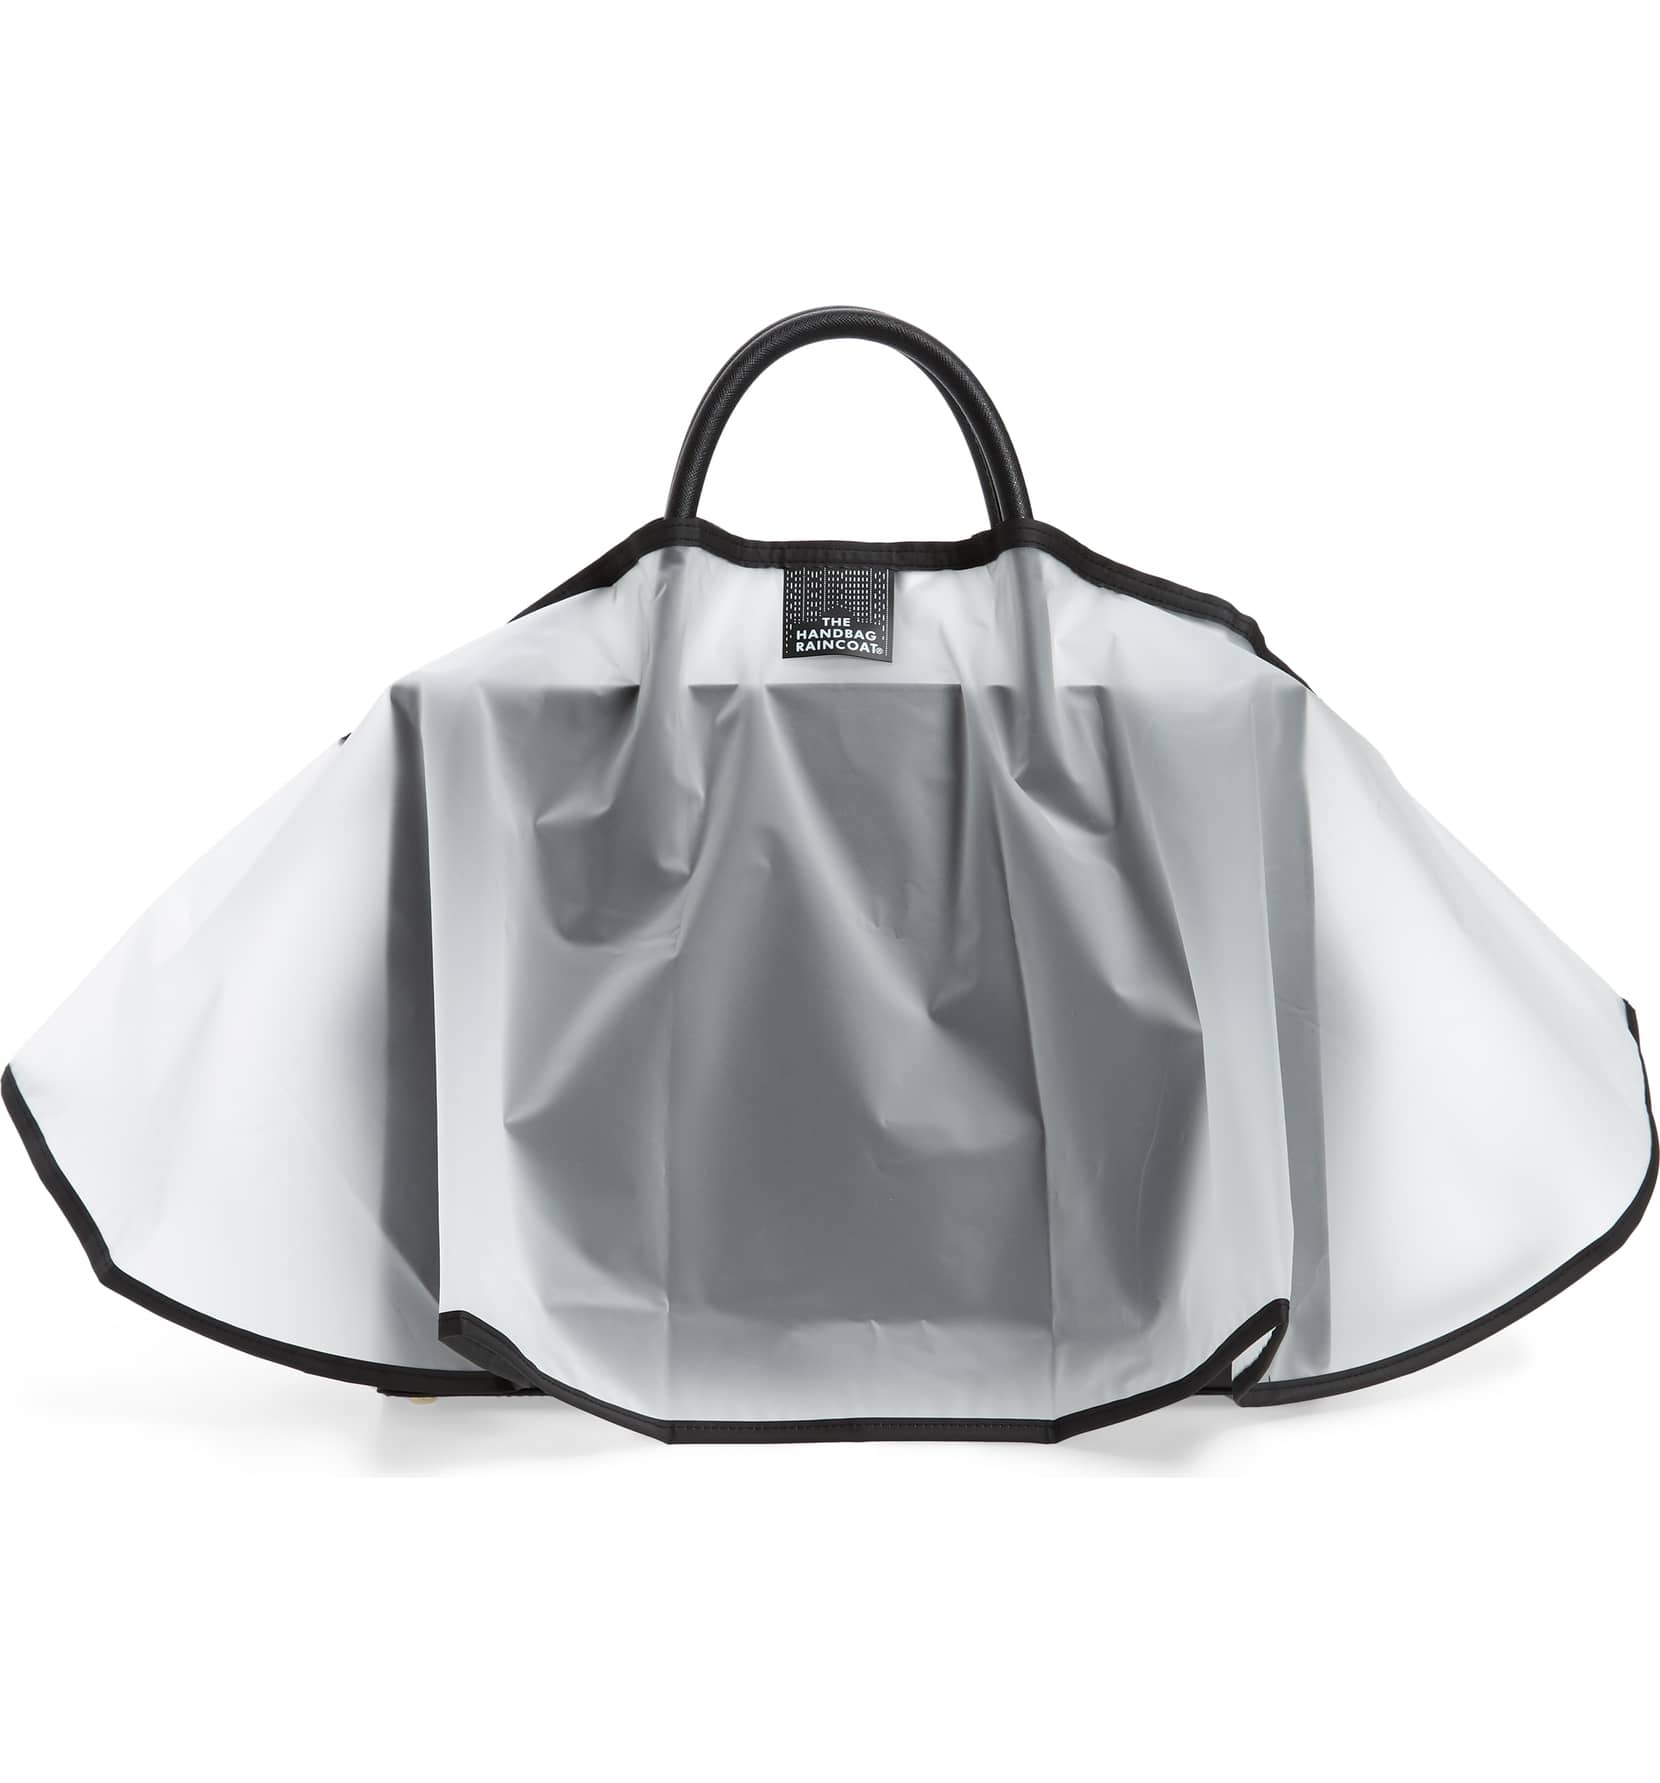 the handbag raincoat $650 chanel